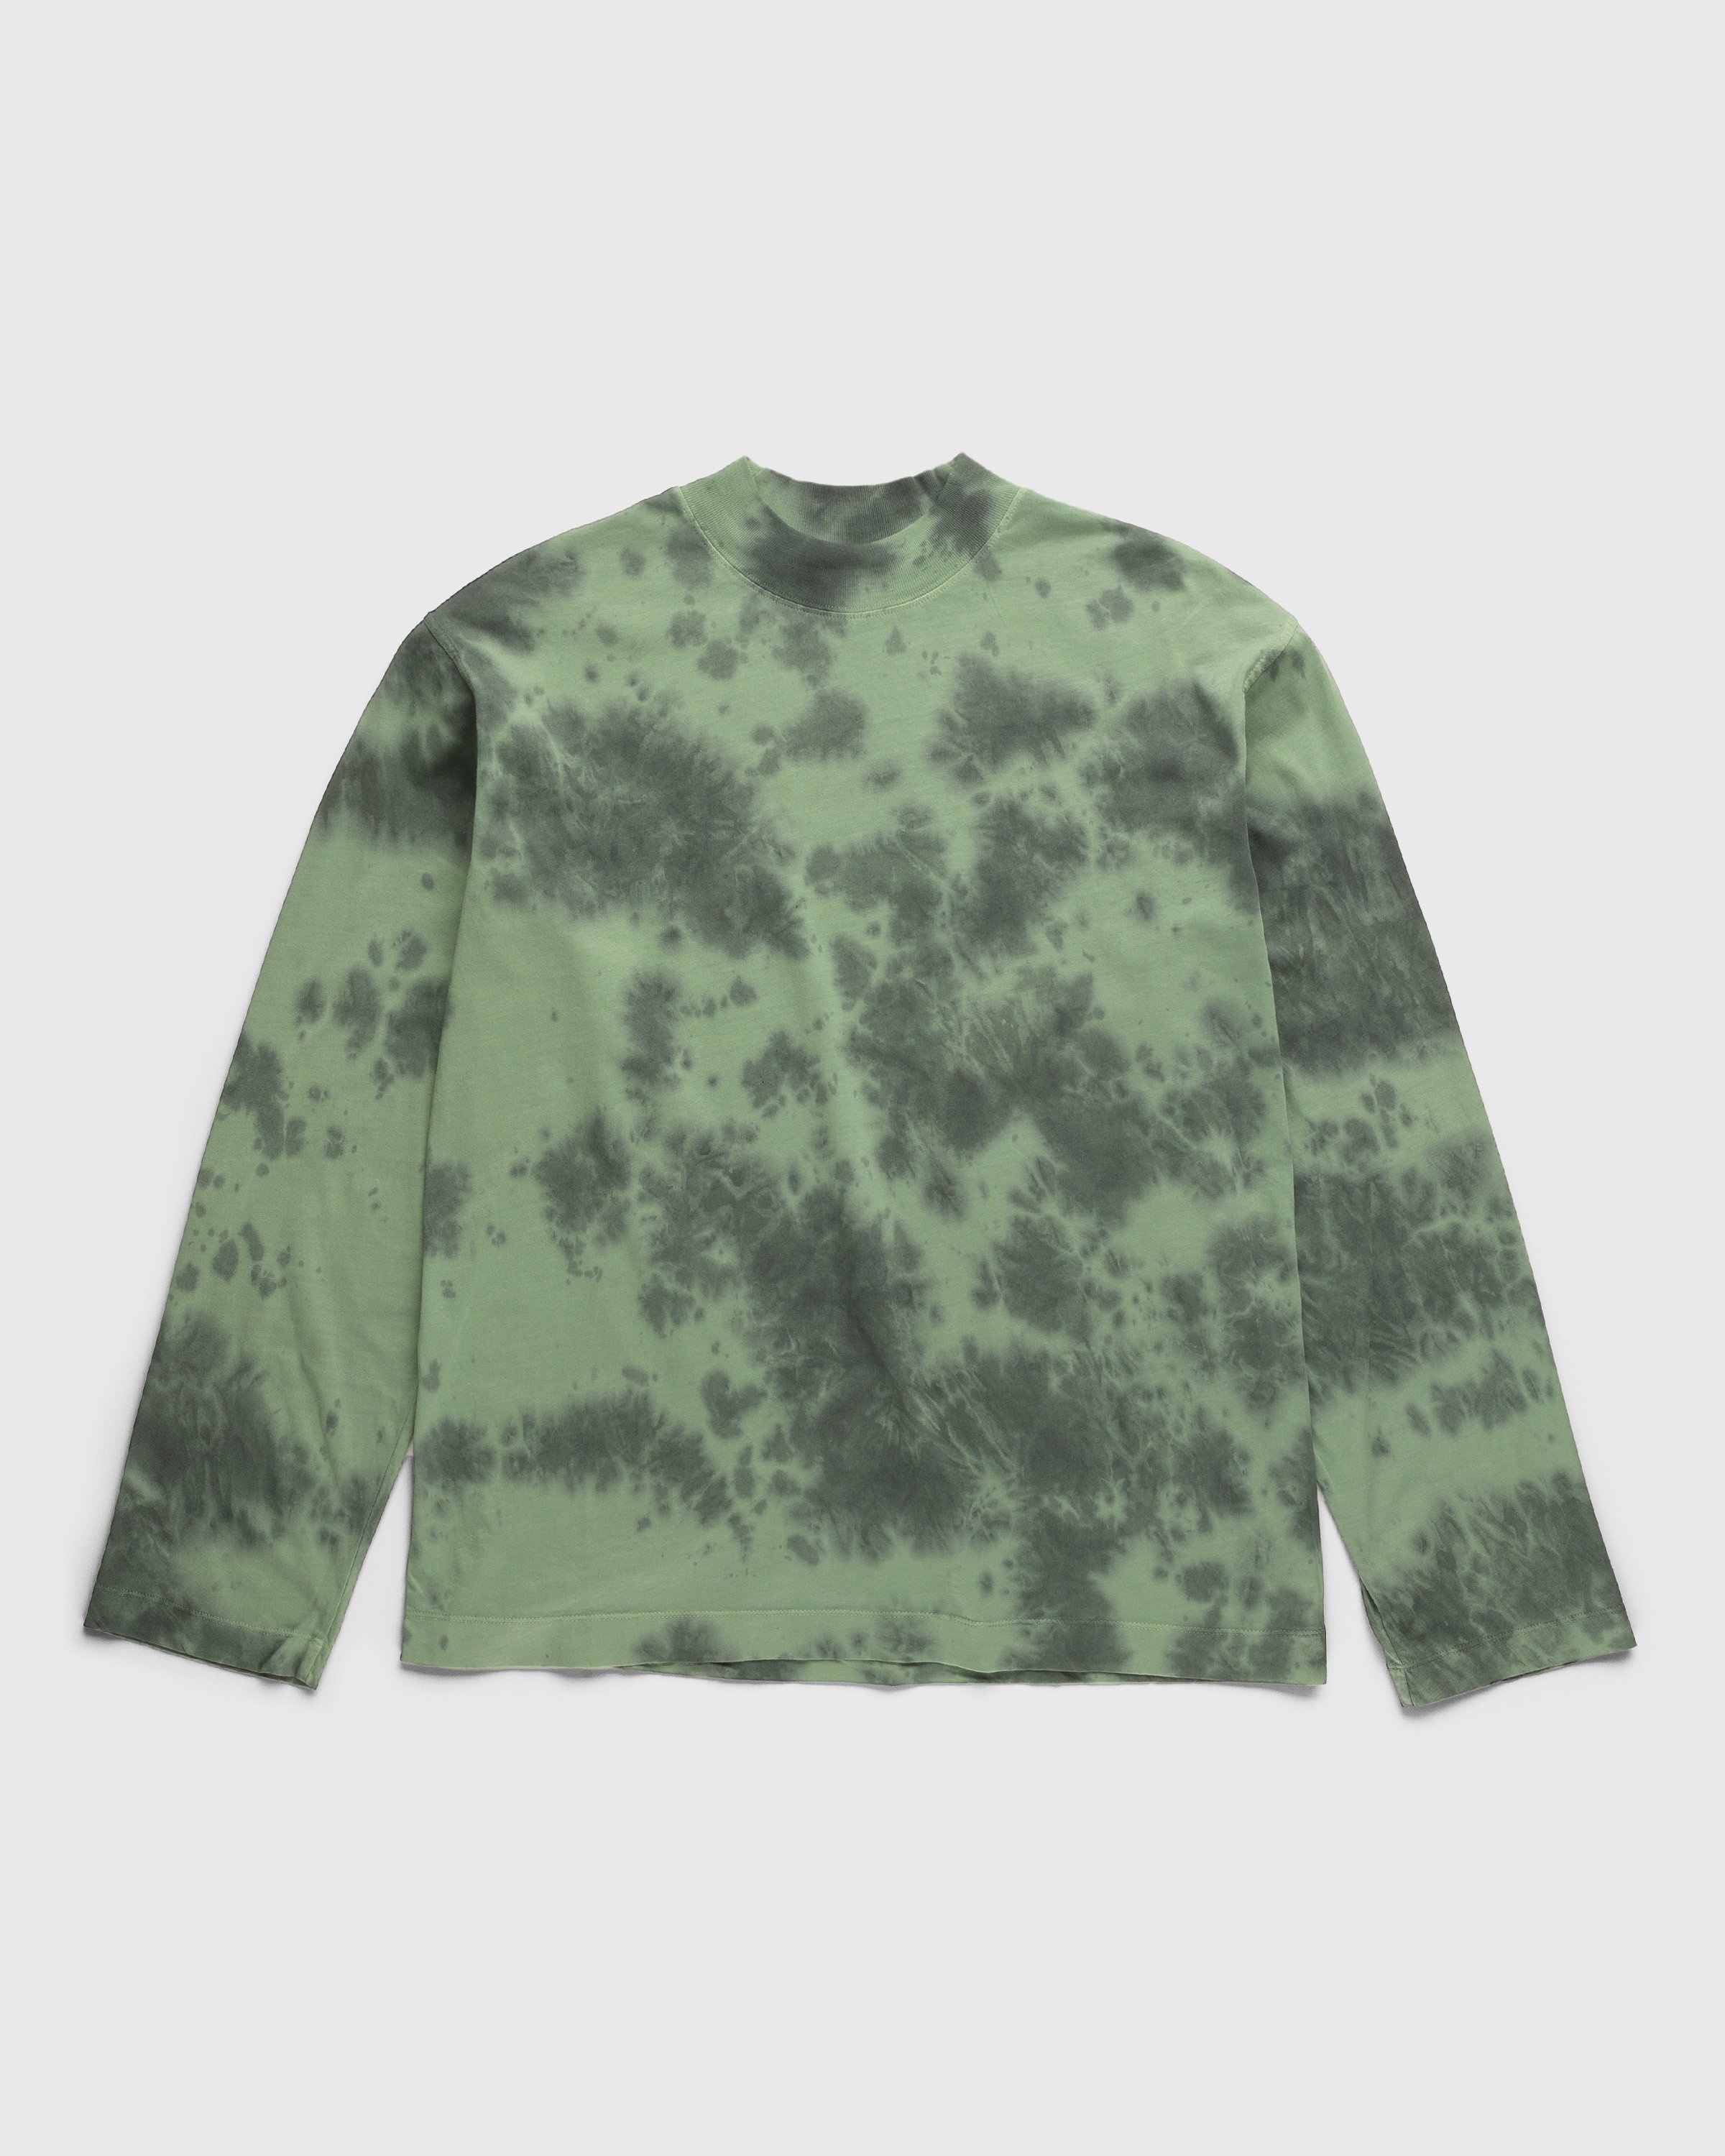 Dries van Noten – Heger T-Shirt Green - Shirts - Green - Image 1